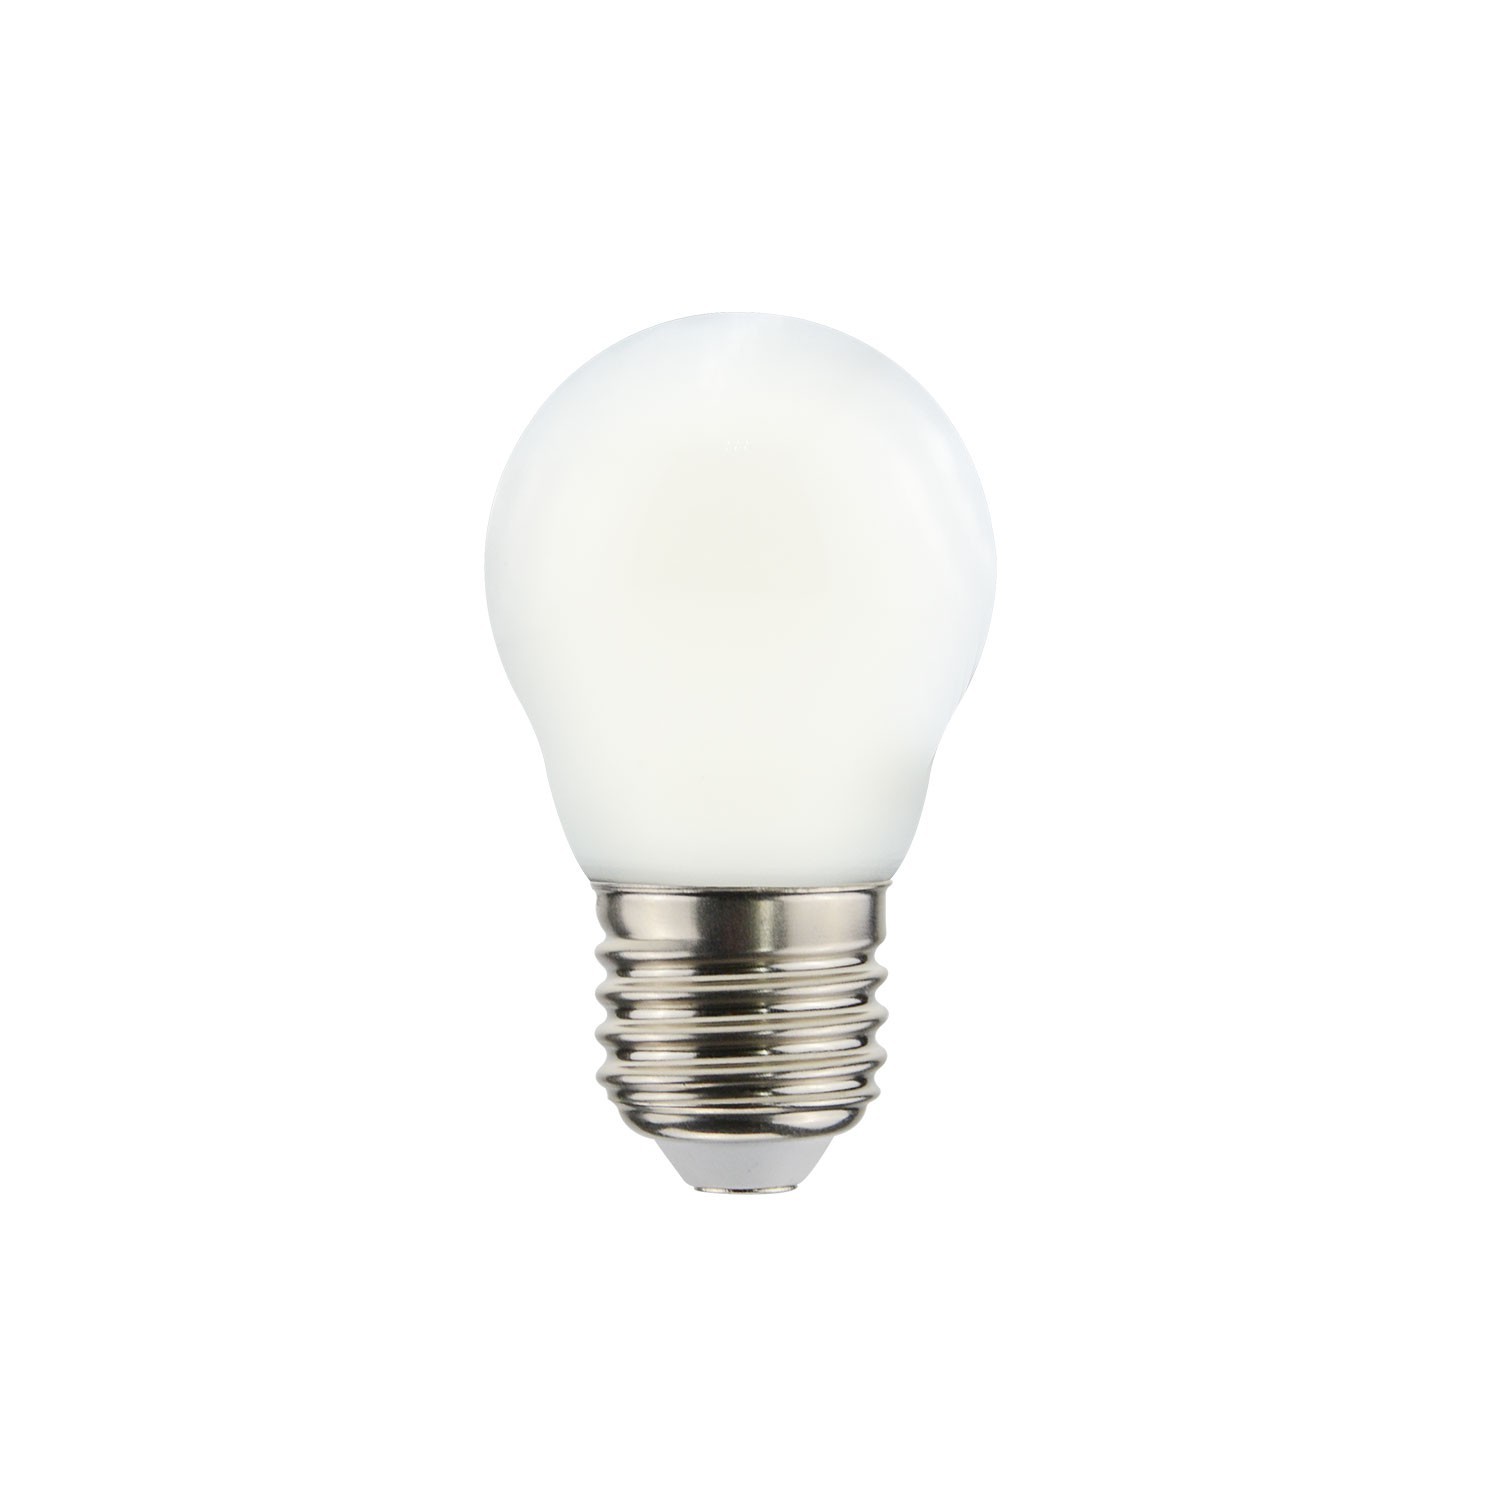 LED Globetta G45 dekorativna mlečno bela 2.2W E27 2700K žarnica